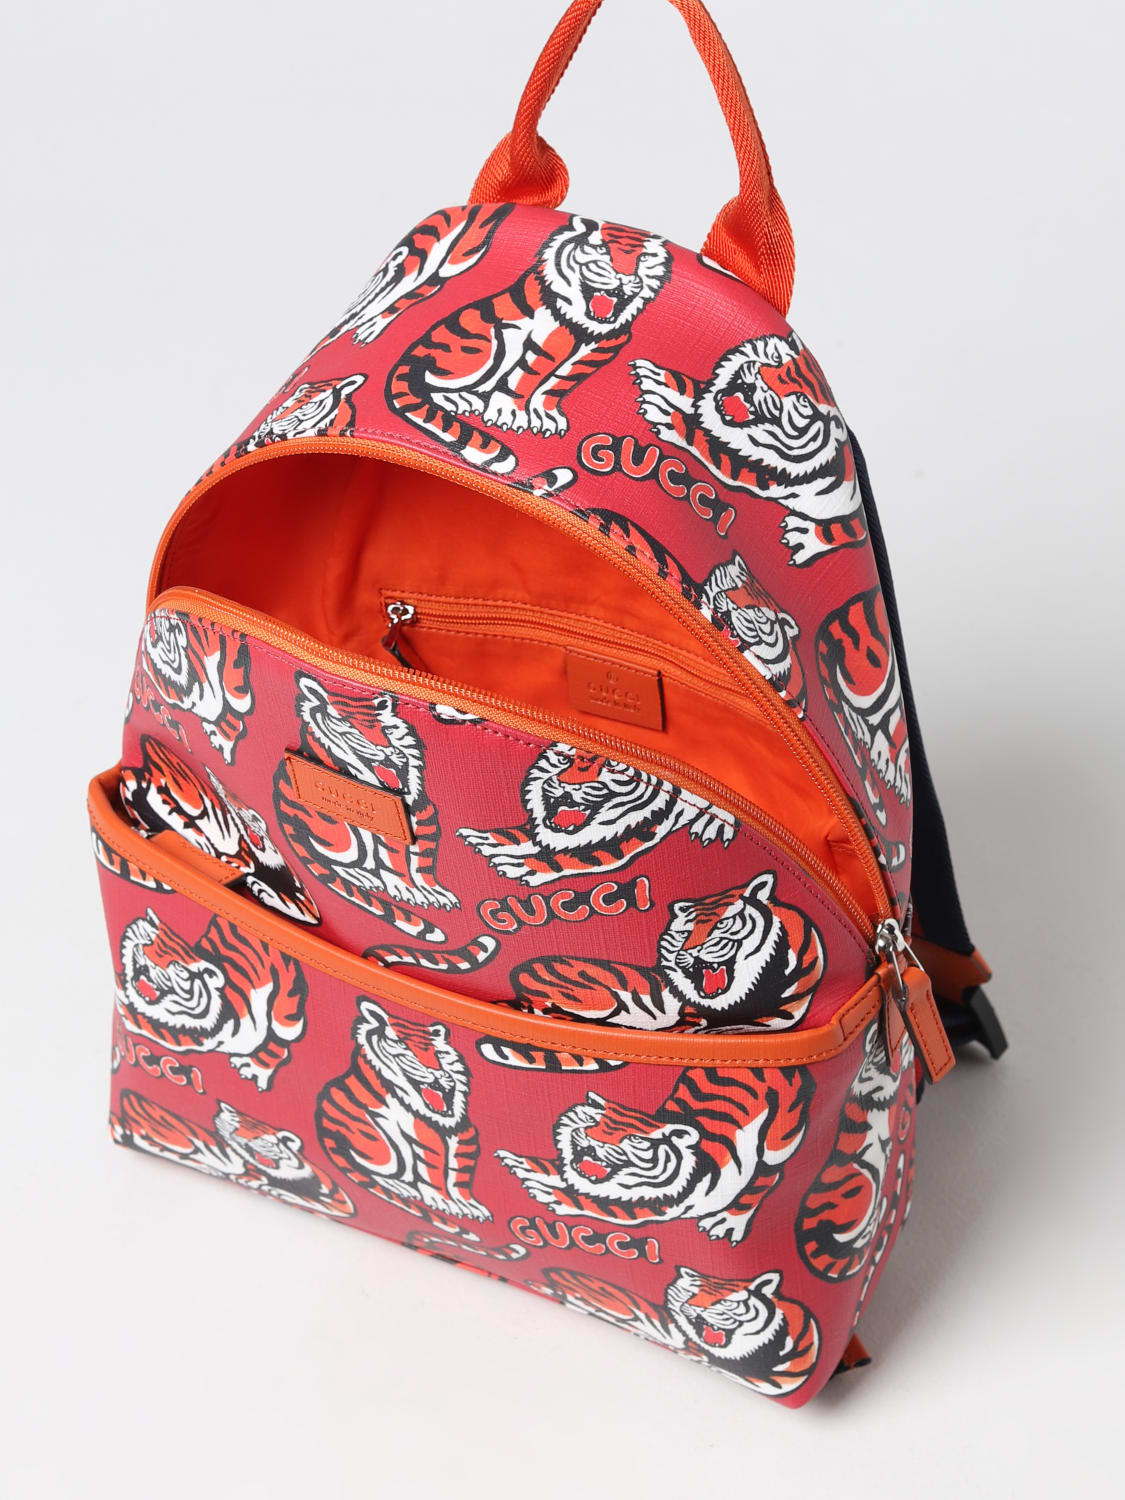 Duffel Bag Gucci: Gucci duffel bag for kids red 2